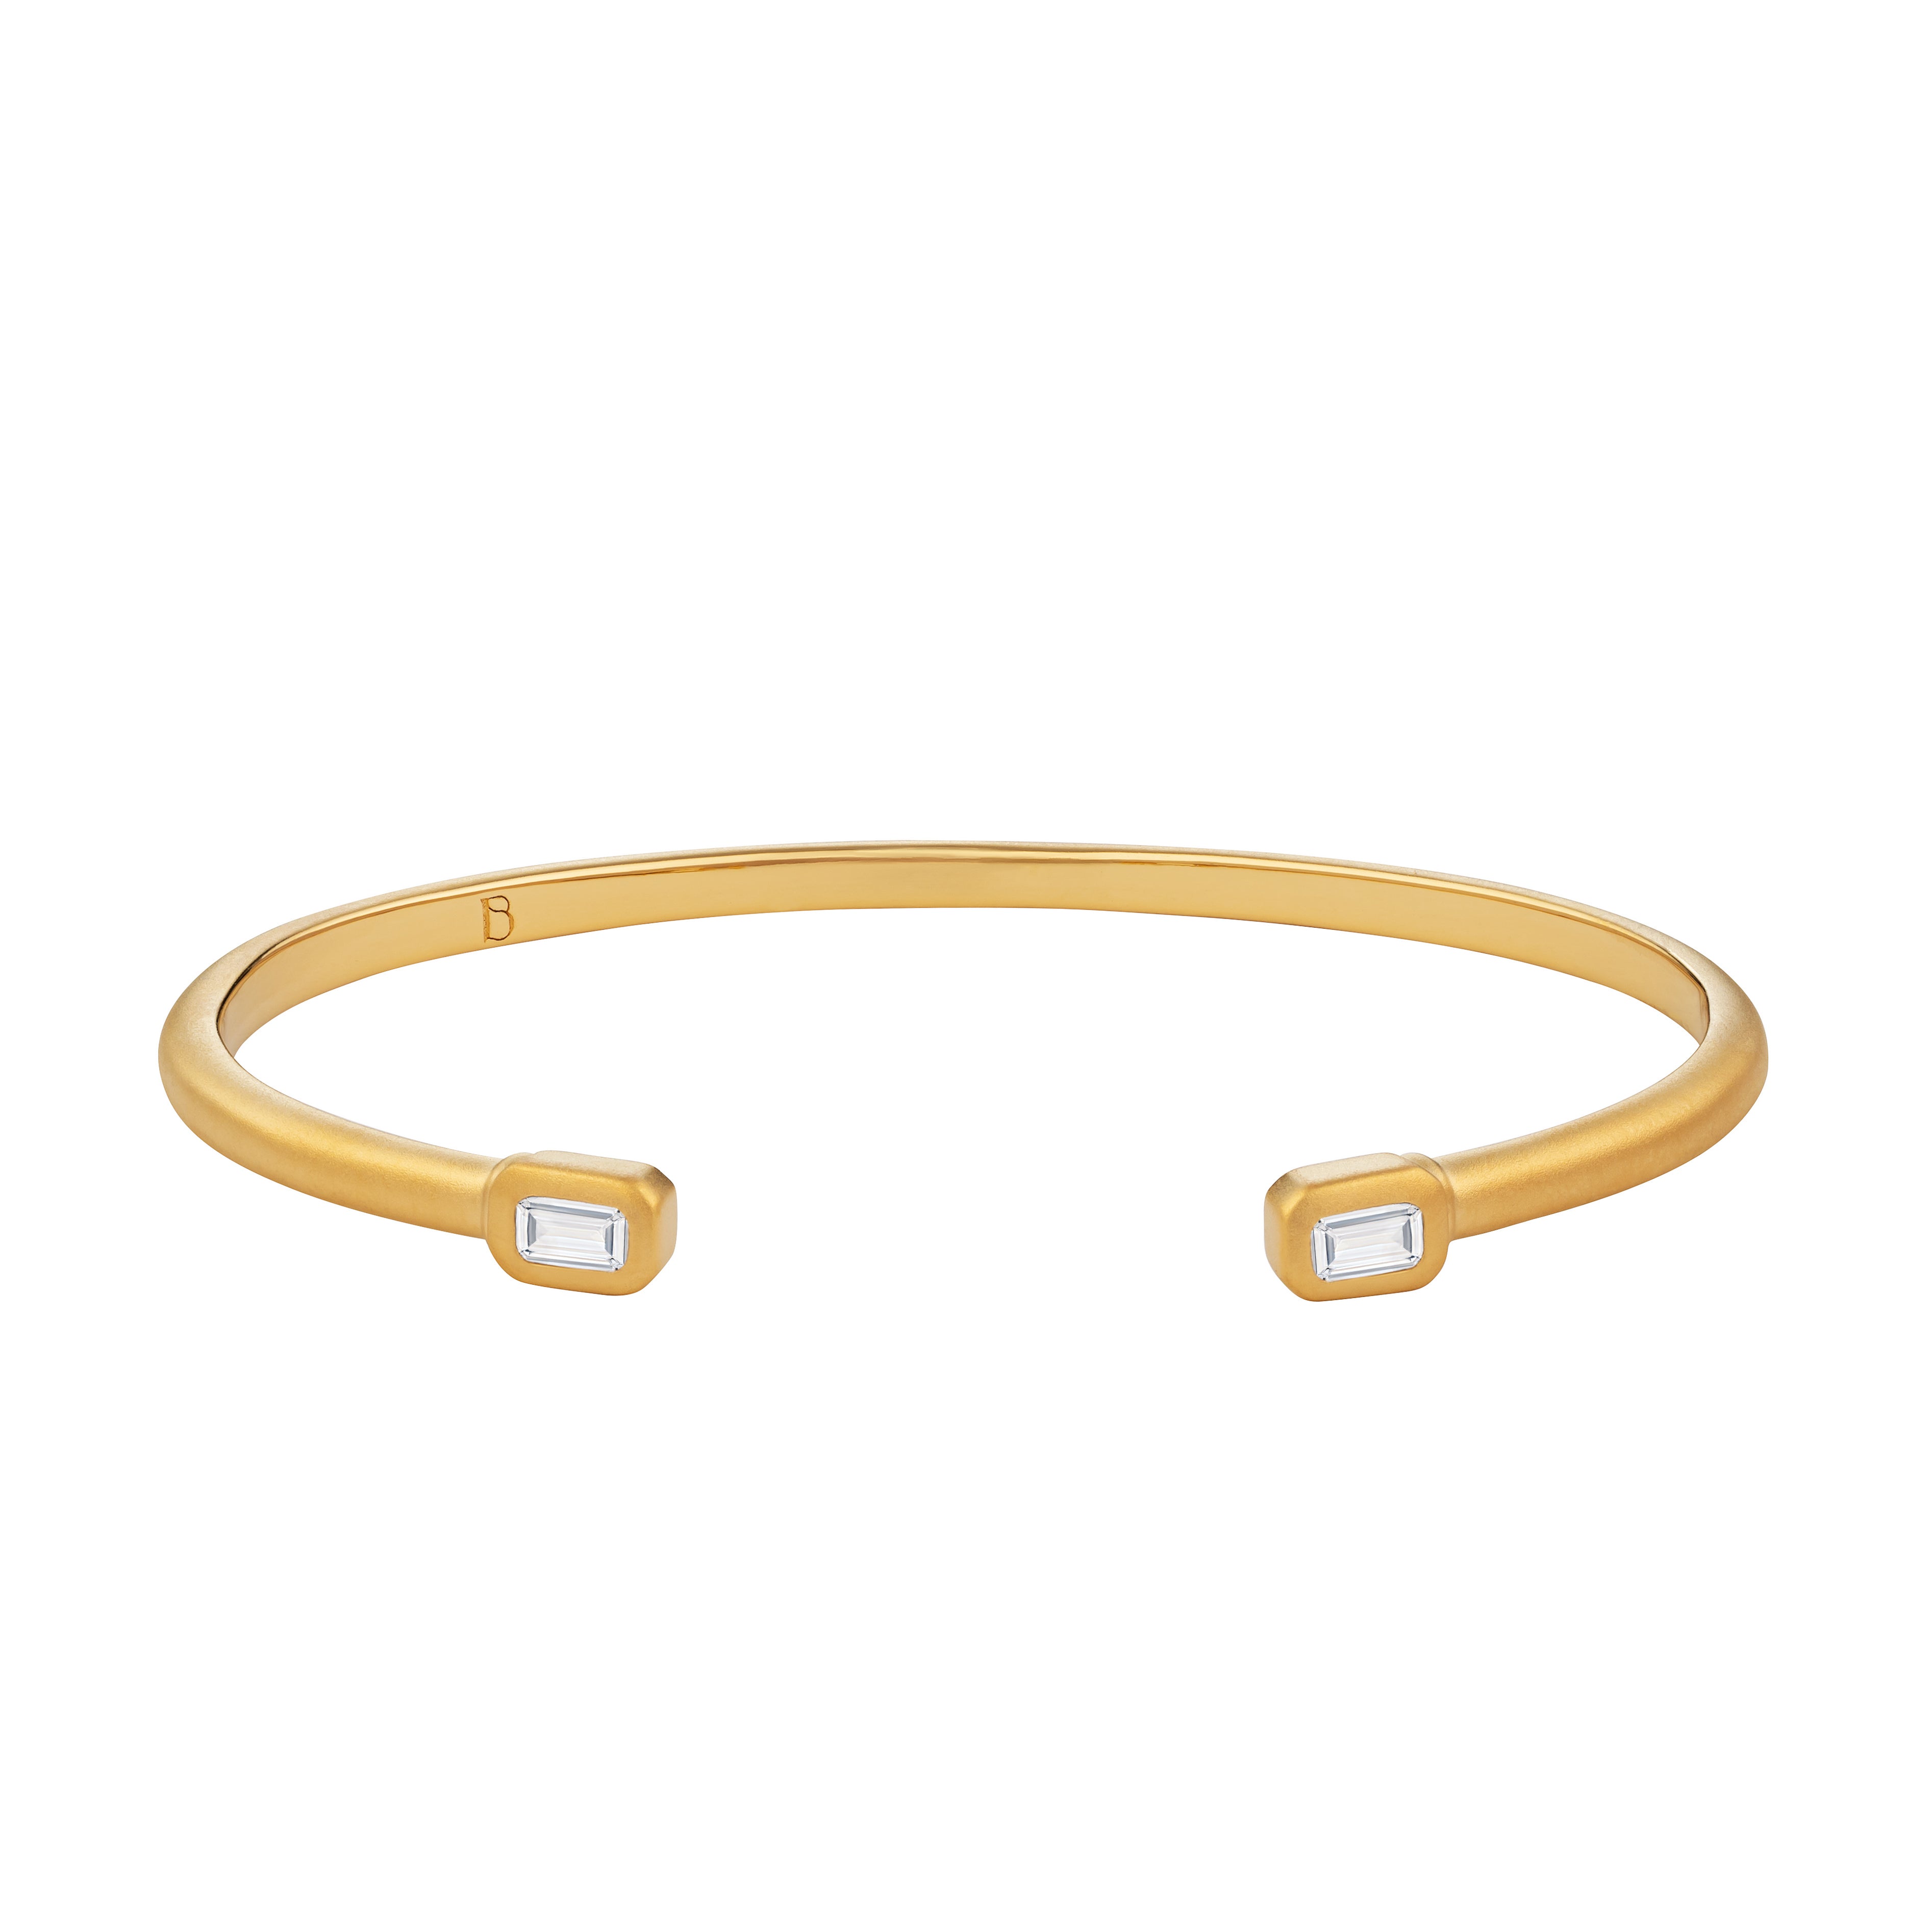 Charm Bangle Bracelet in 18k Gold Vermeil